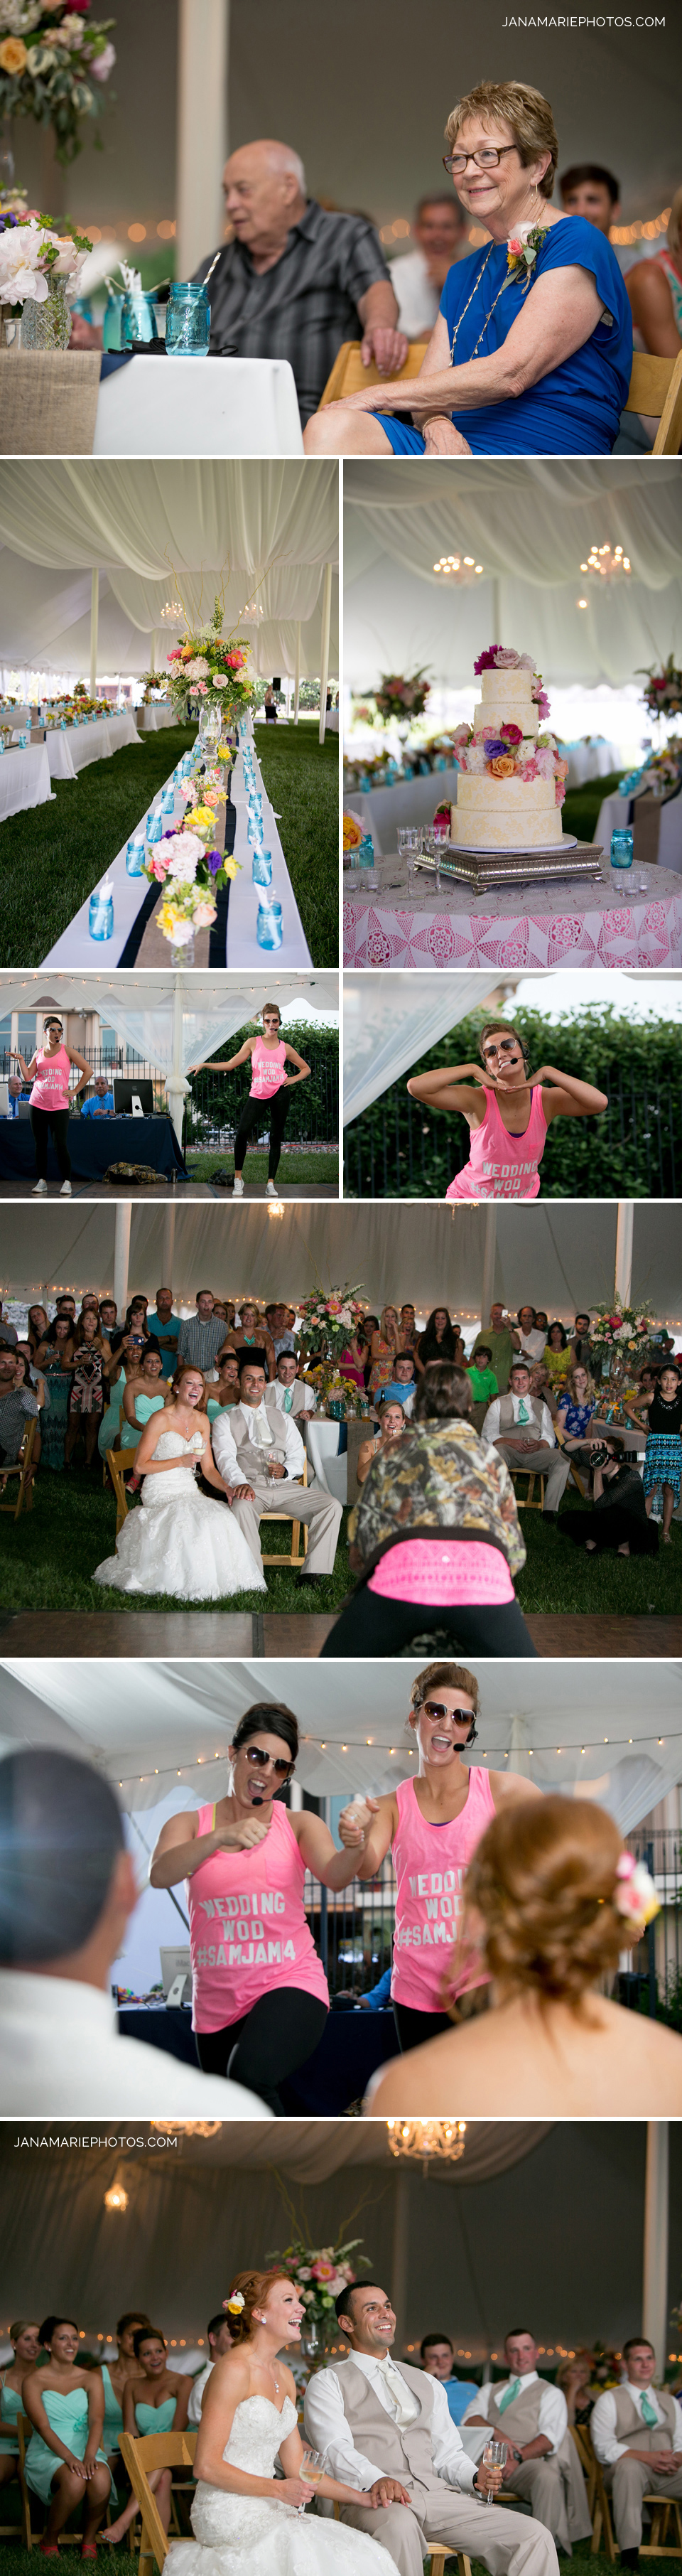 Shawnee Private Estate Wedding, Kansas Weddings, Jana Marie Photography, Outdoor ceremony, Backyard wedding, Kim Ho, You're Invited,DJS for Hire